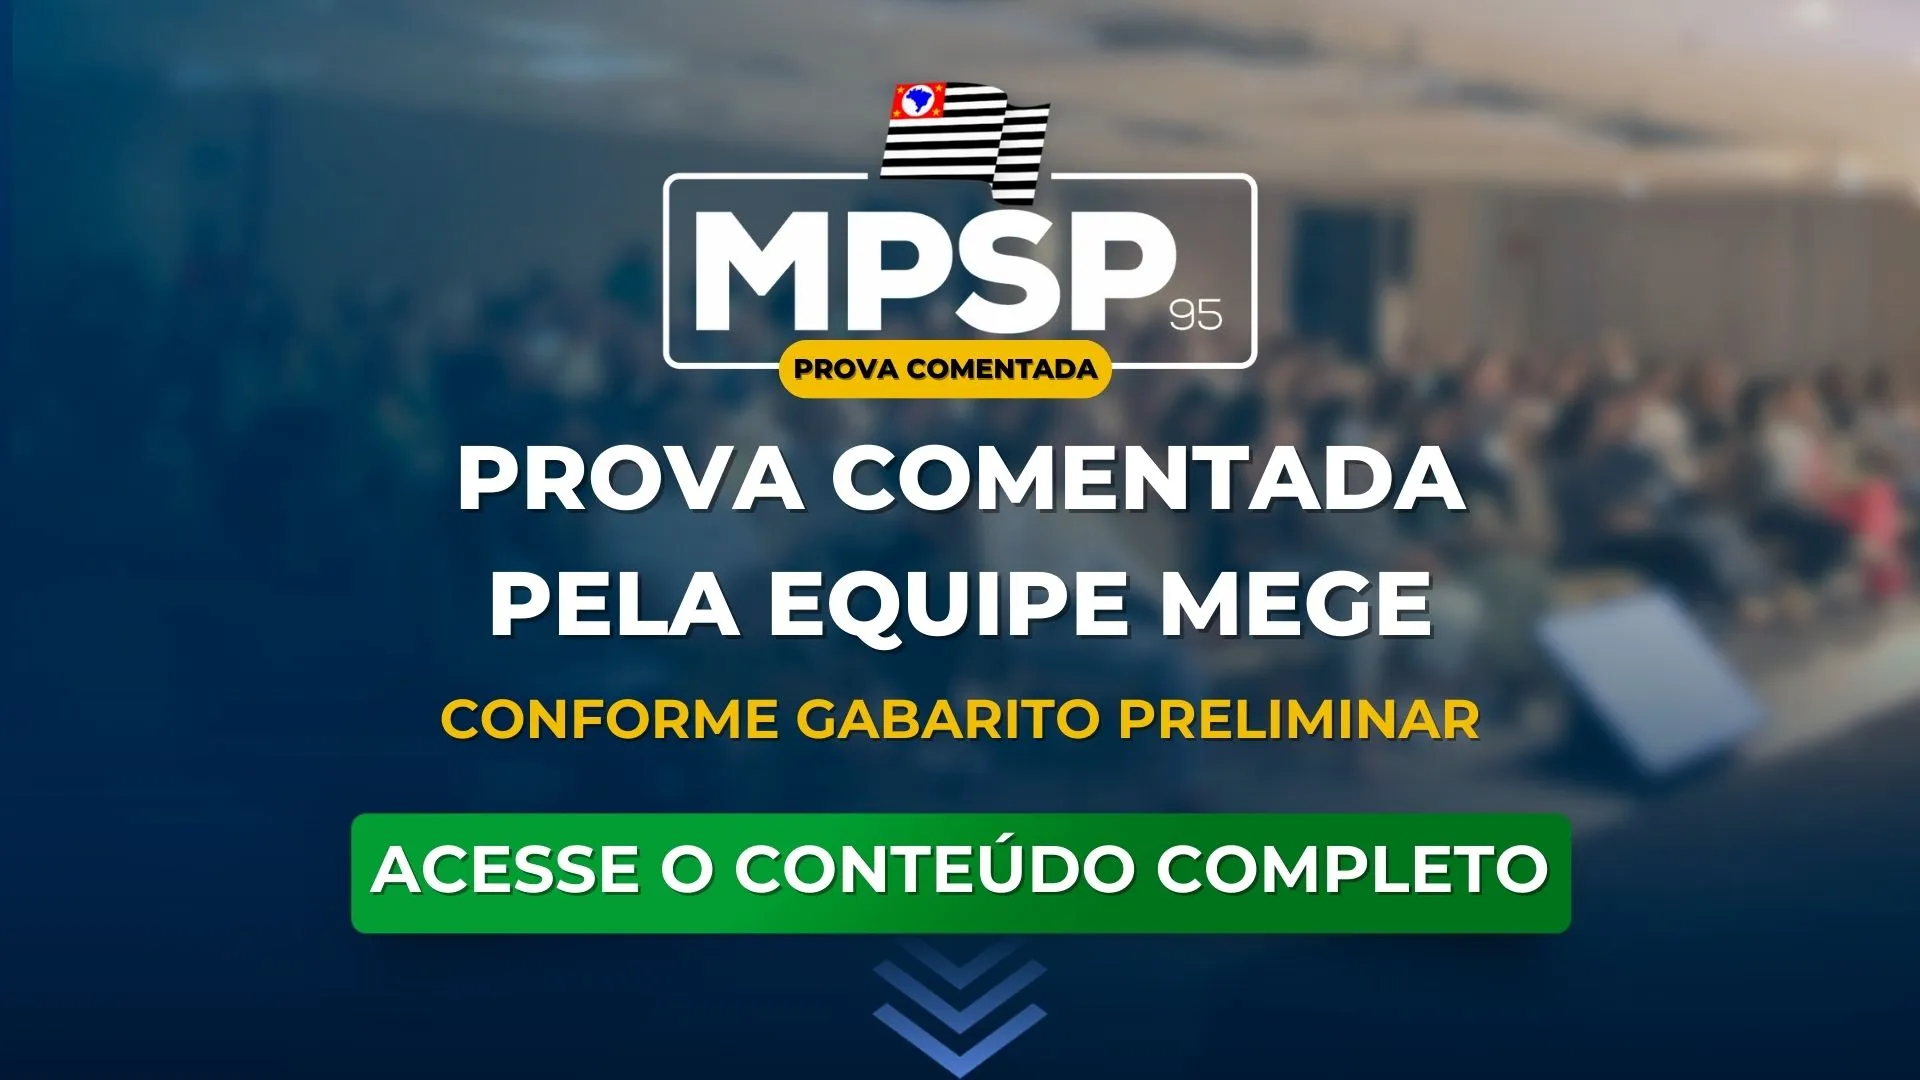 MPSP 94: Prova Comentada pela Equipe Mege. Conforme gabarito preliminar.